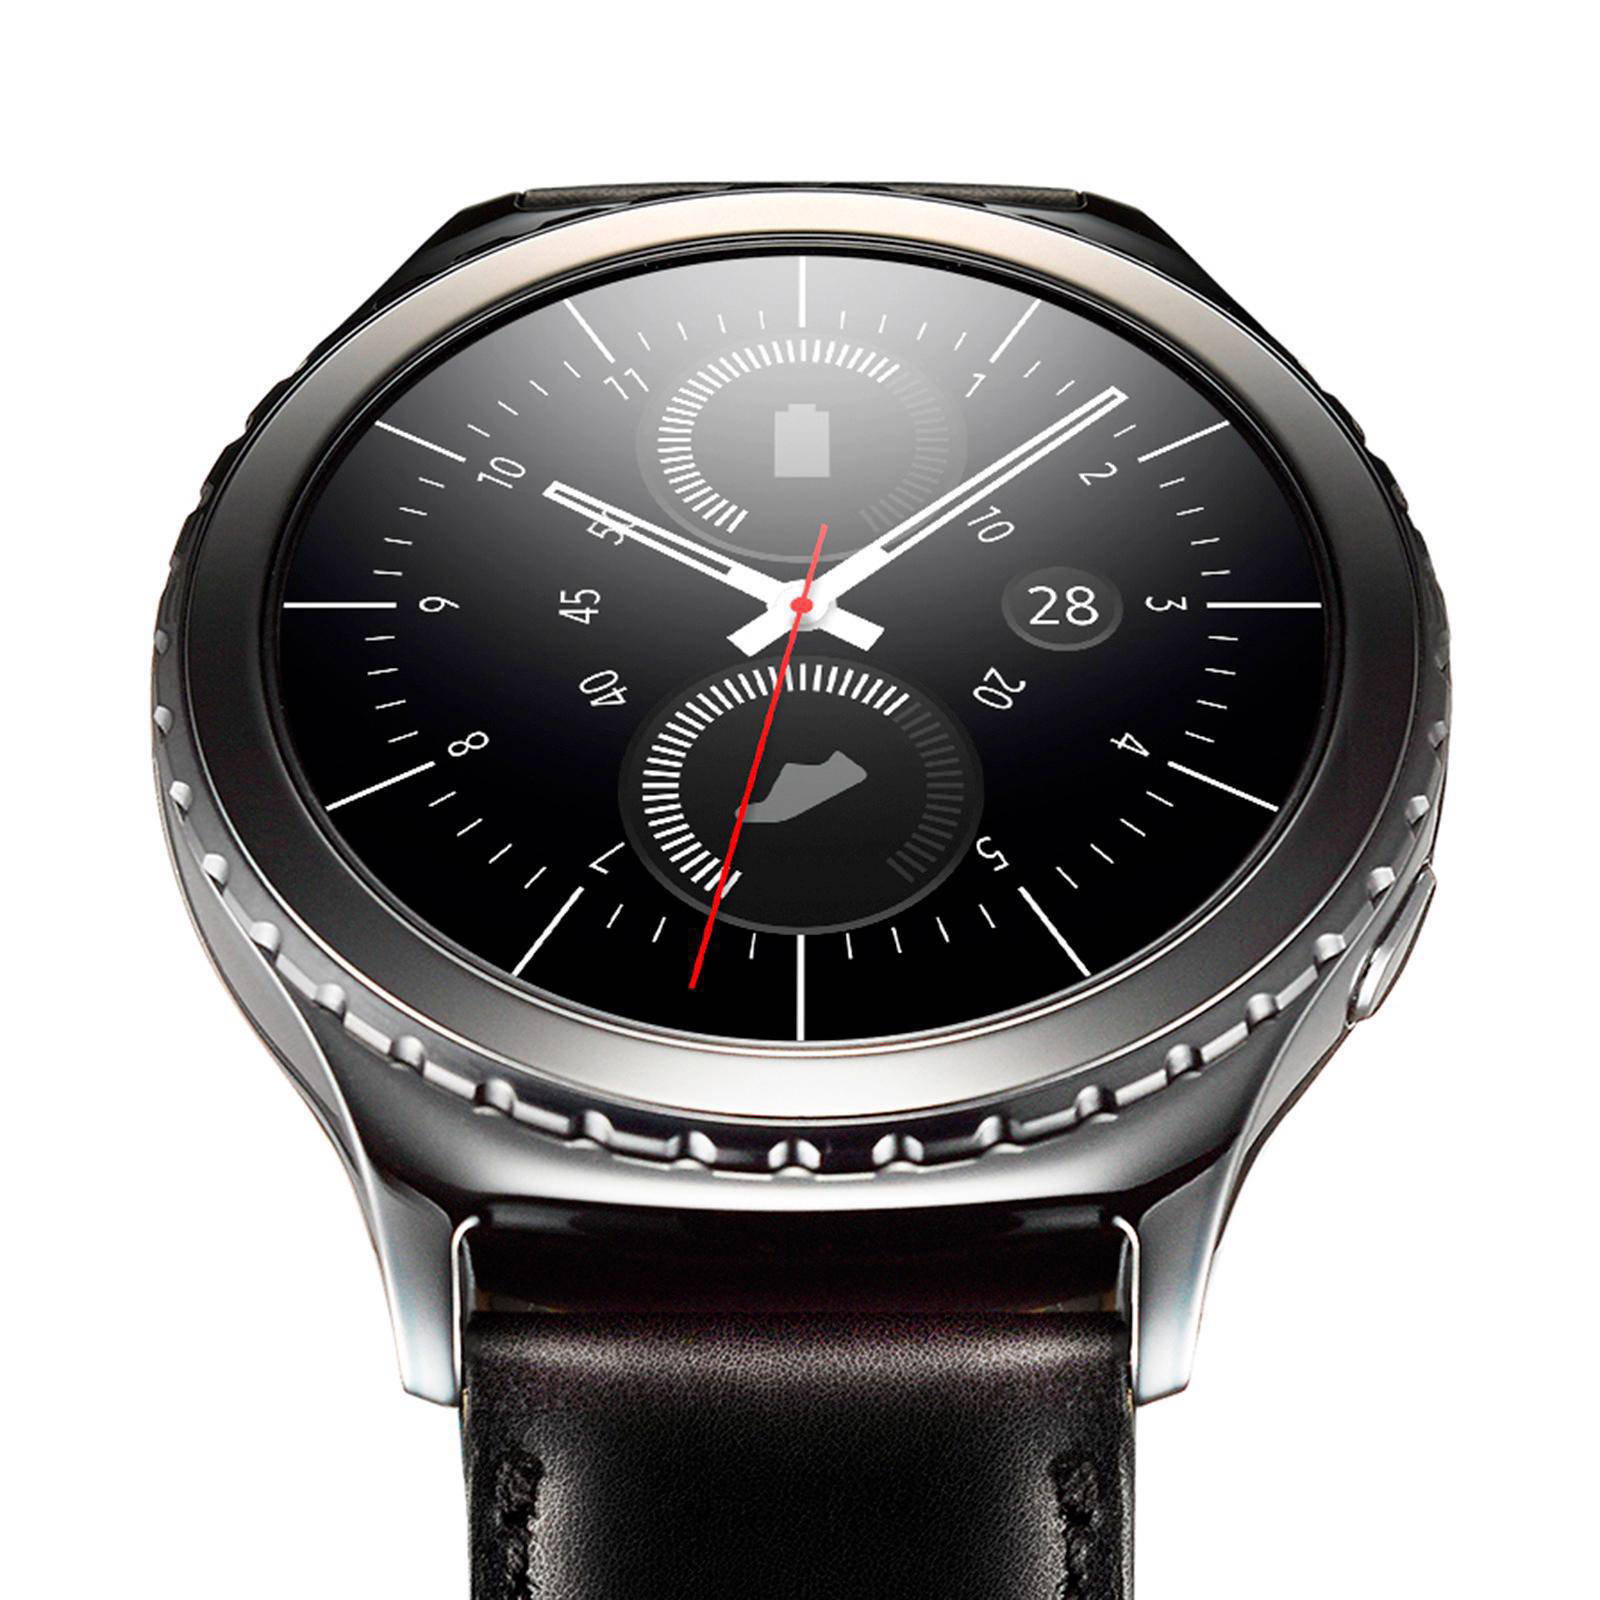 Huisje Prestigieus radiator Samsung Gear S2 smartwatch | wehkamp